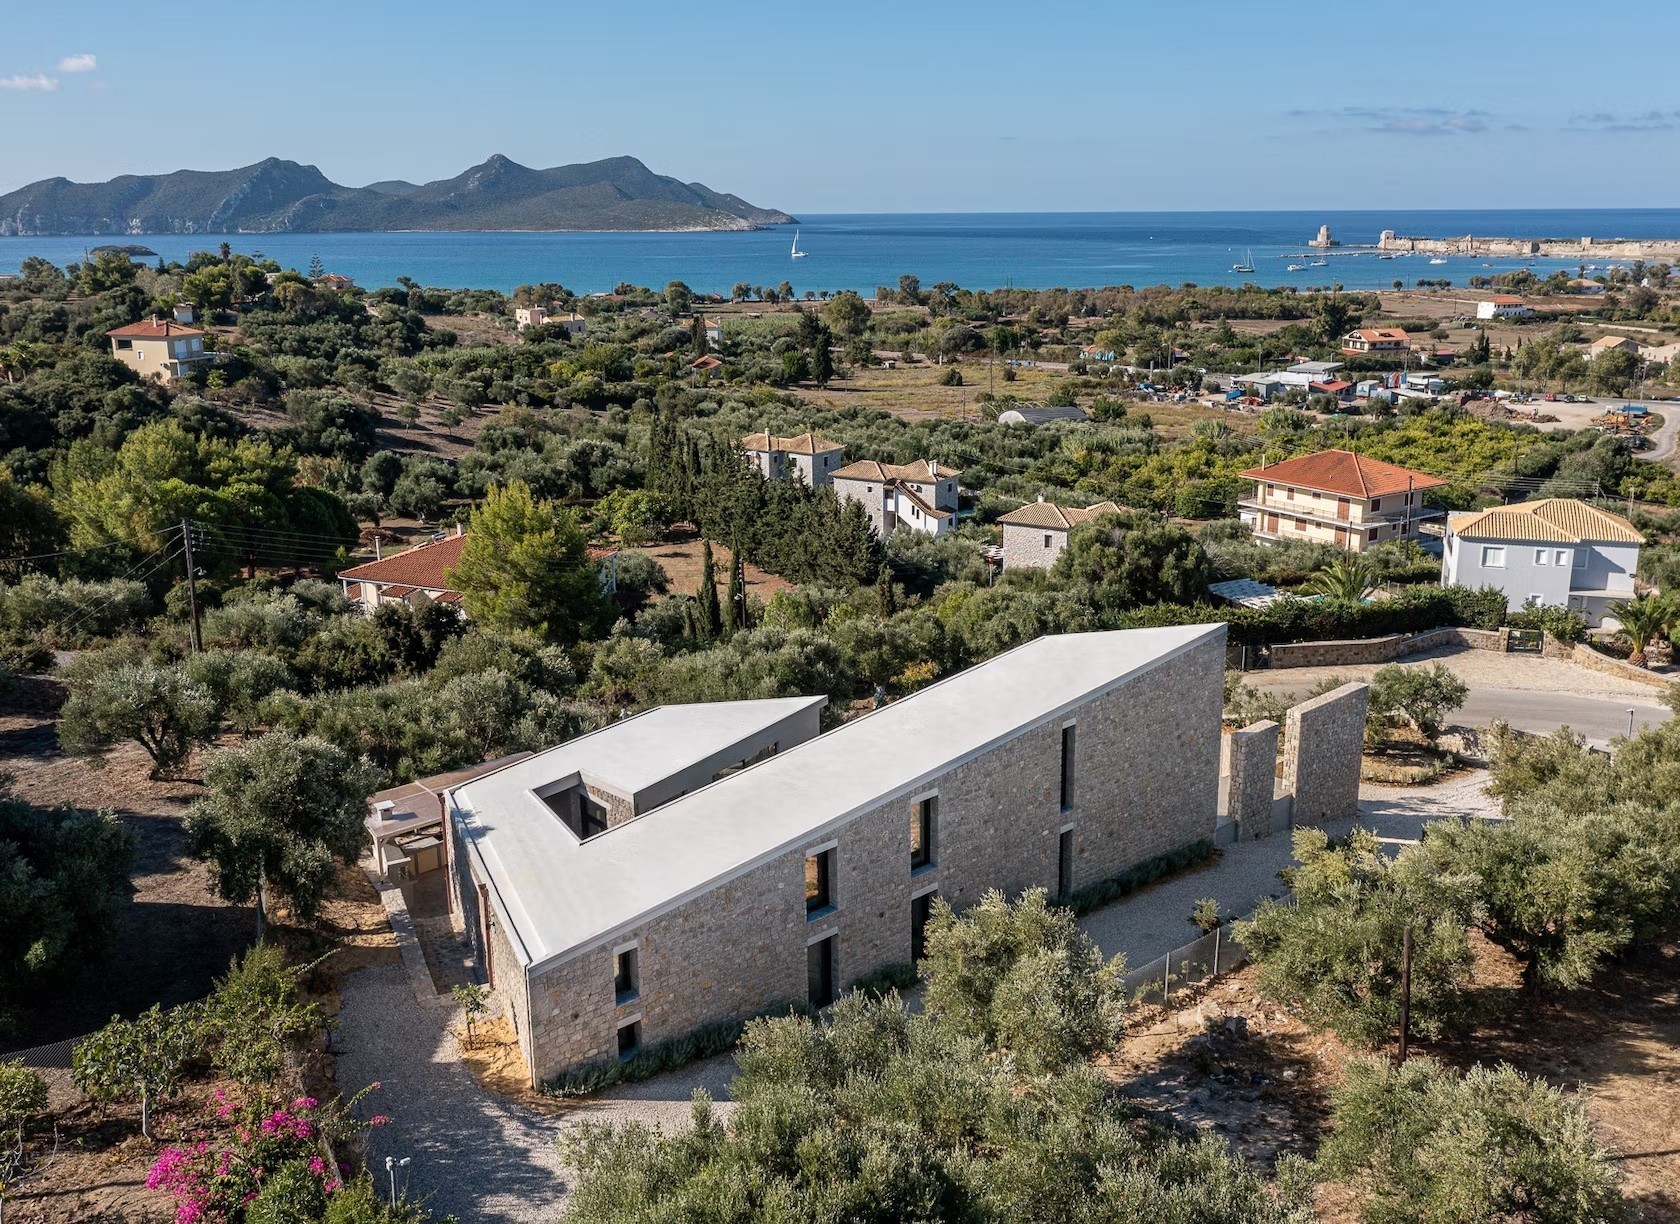 Tα 25 καλύτερα αρχιτεκτονικά γραφεία της Ελλάδας, σύμφωνα με το έγκυρο Architizer